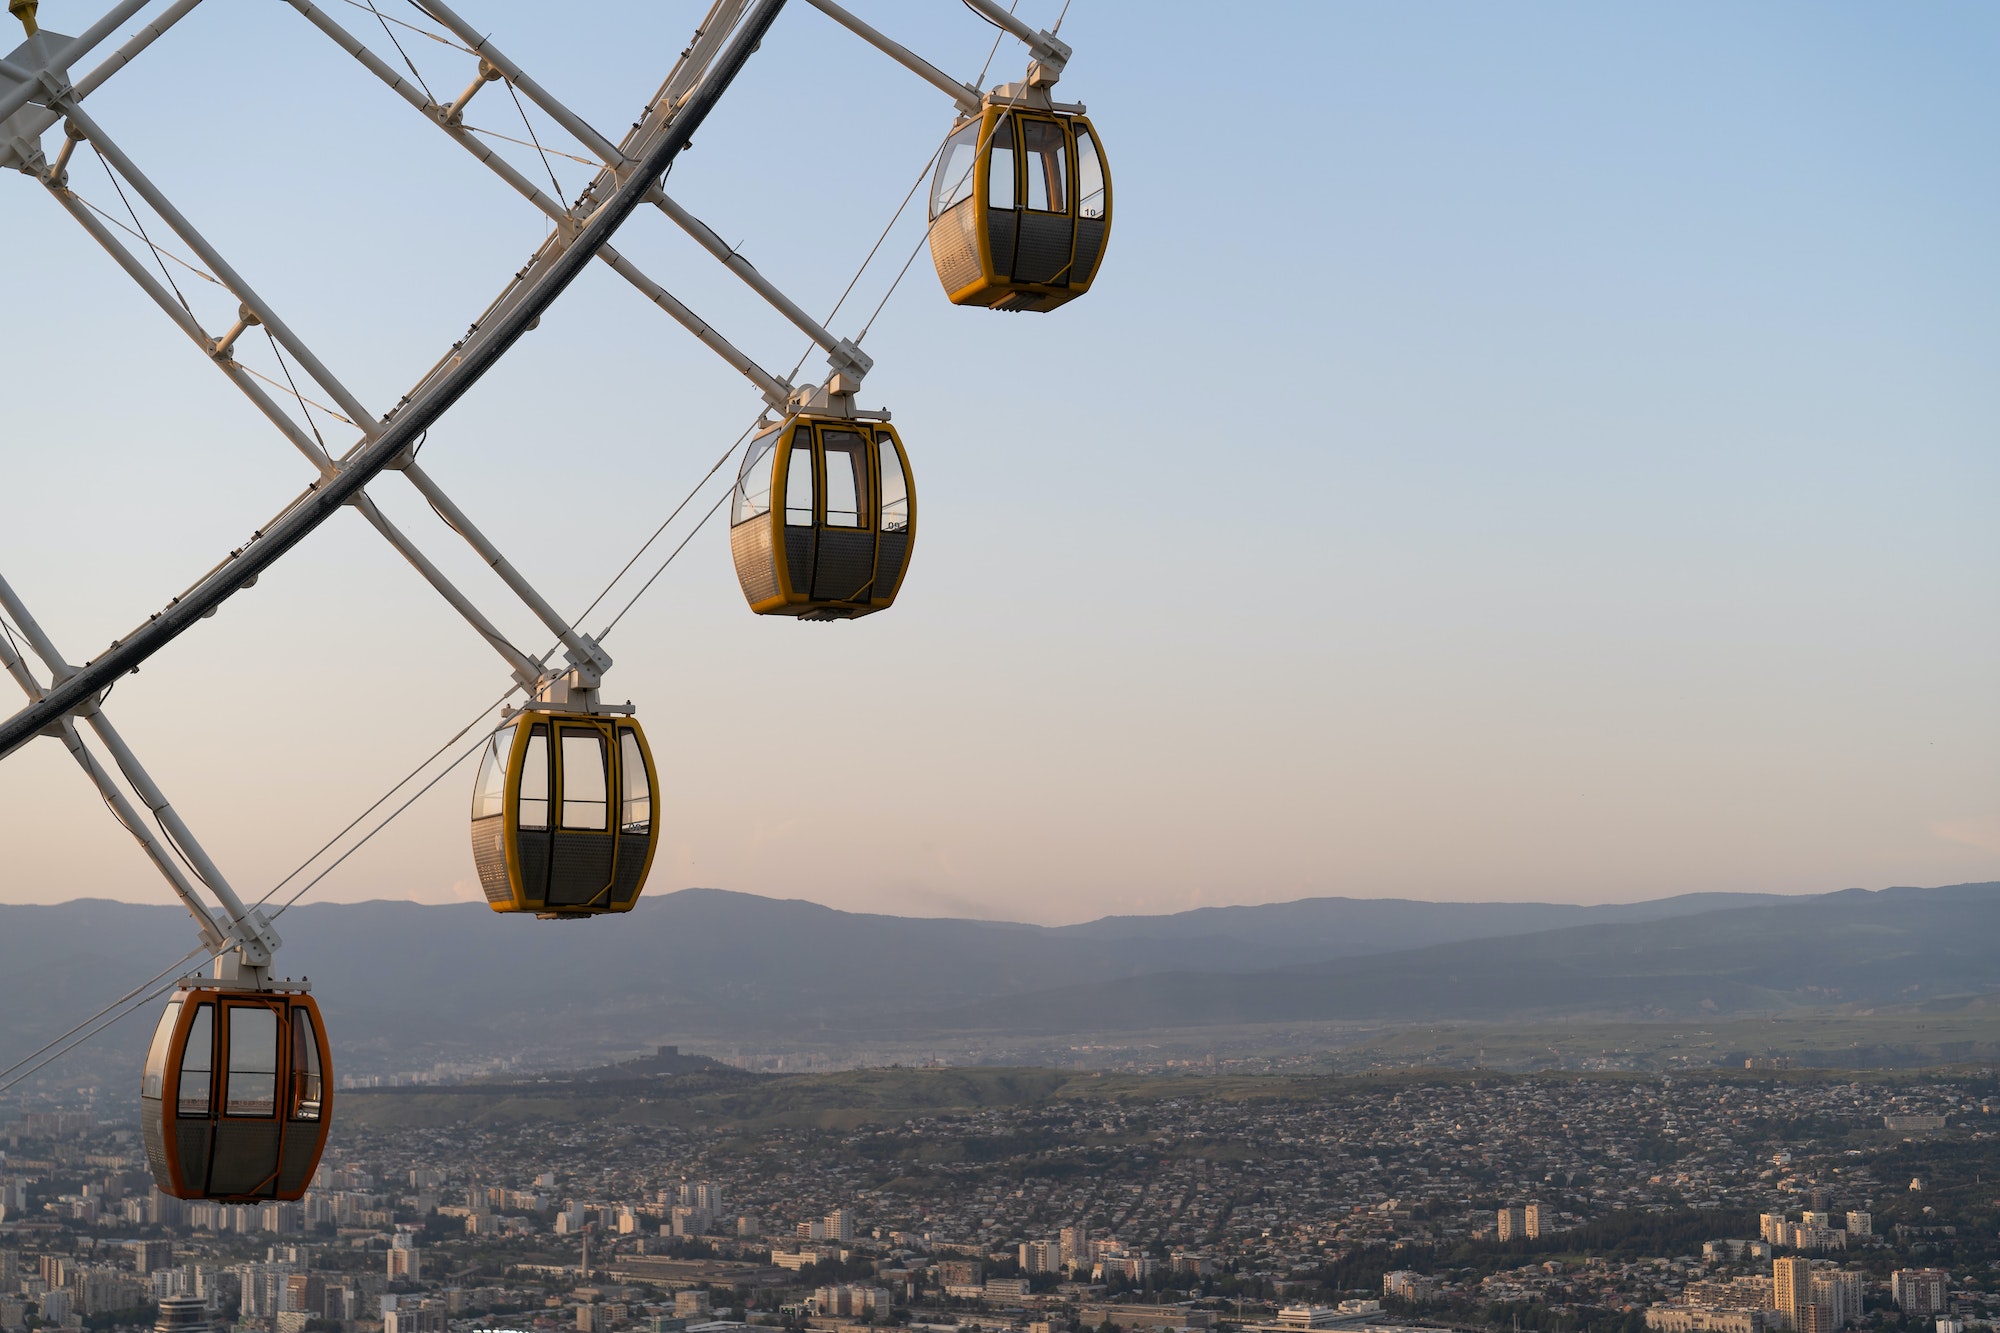 Ferris wheel in Mtatsminda amusement park in Tbilisi, Georgia. Giant wheel at sunset